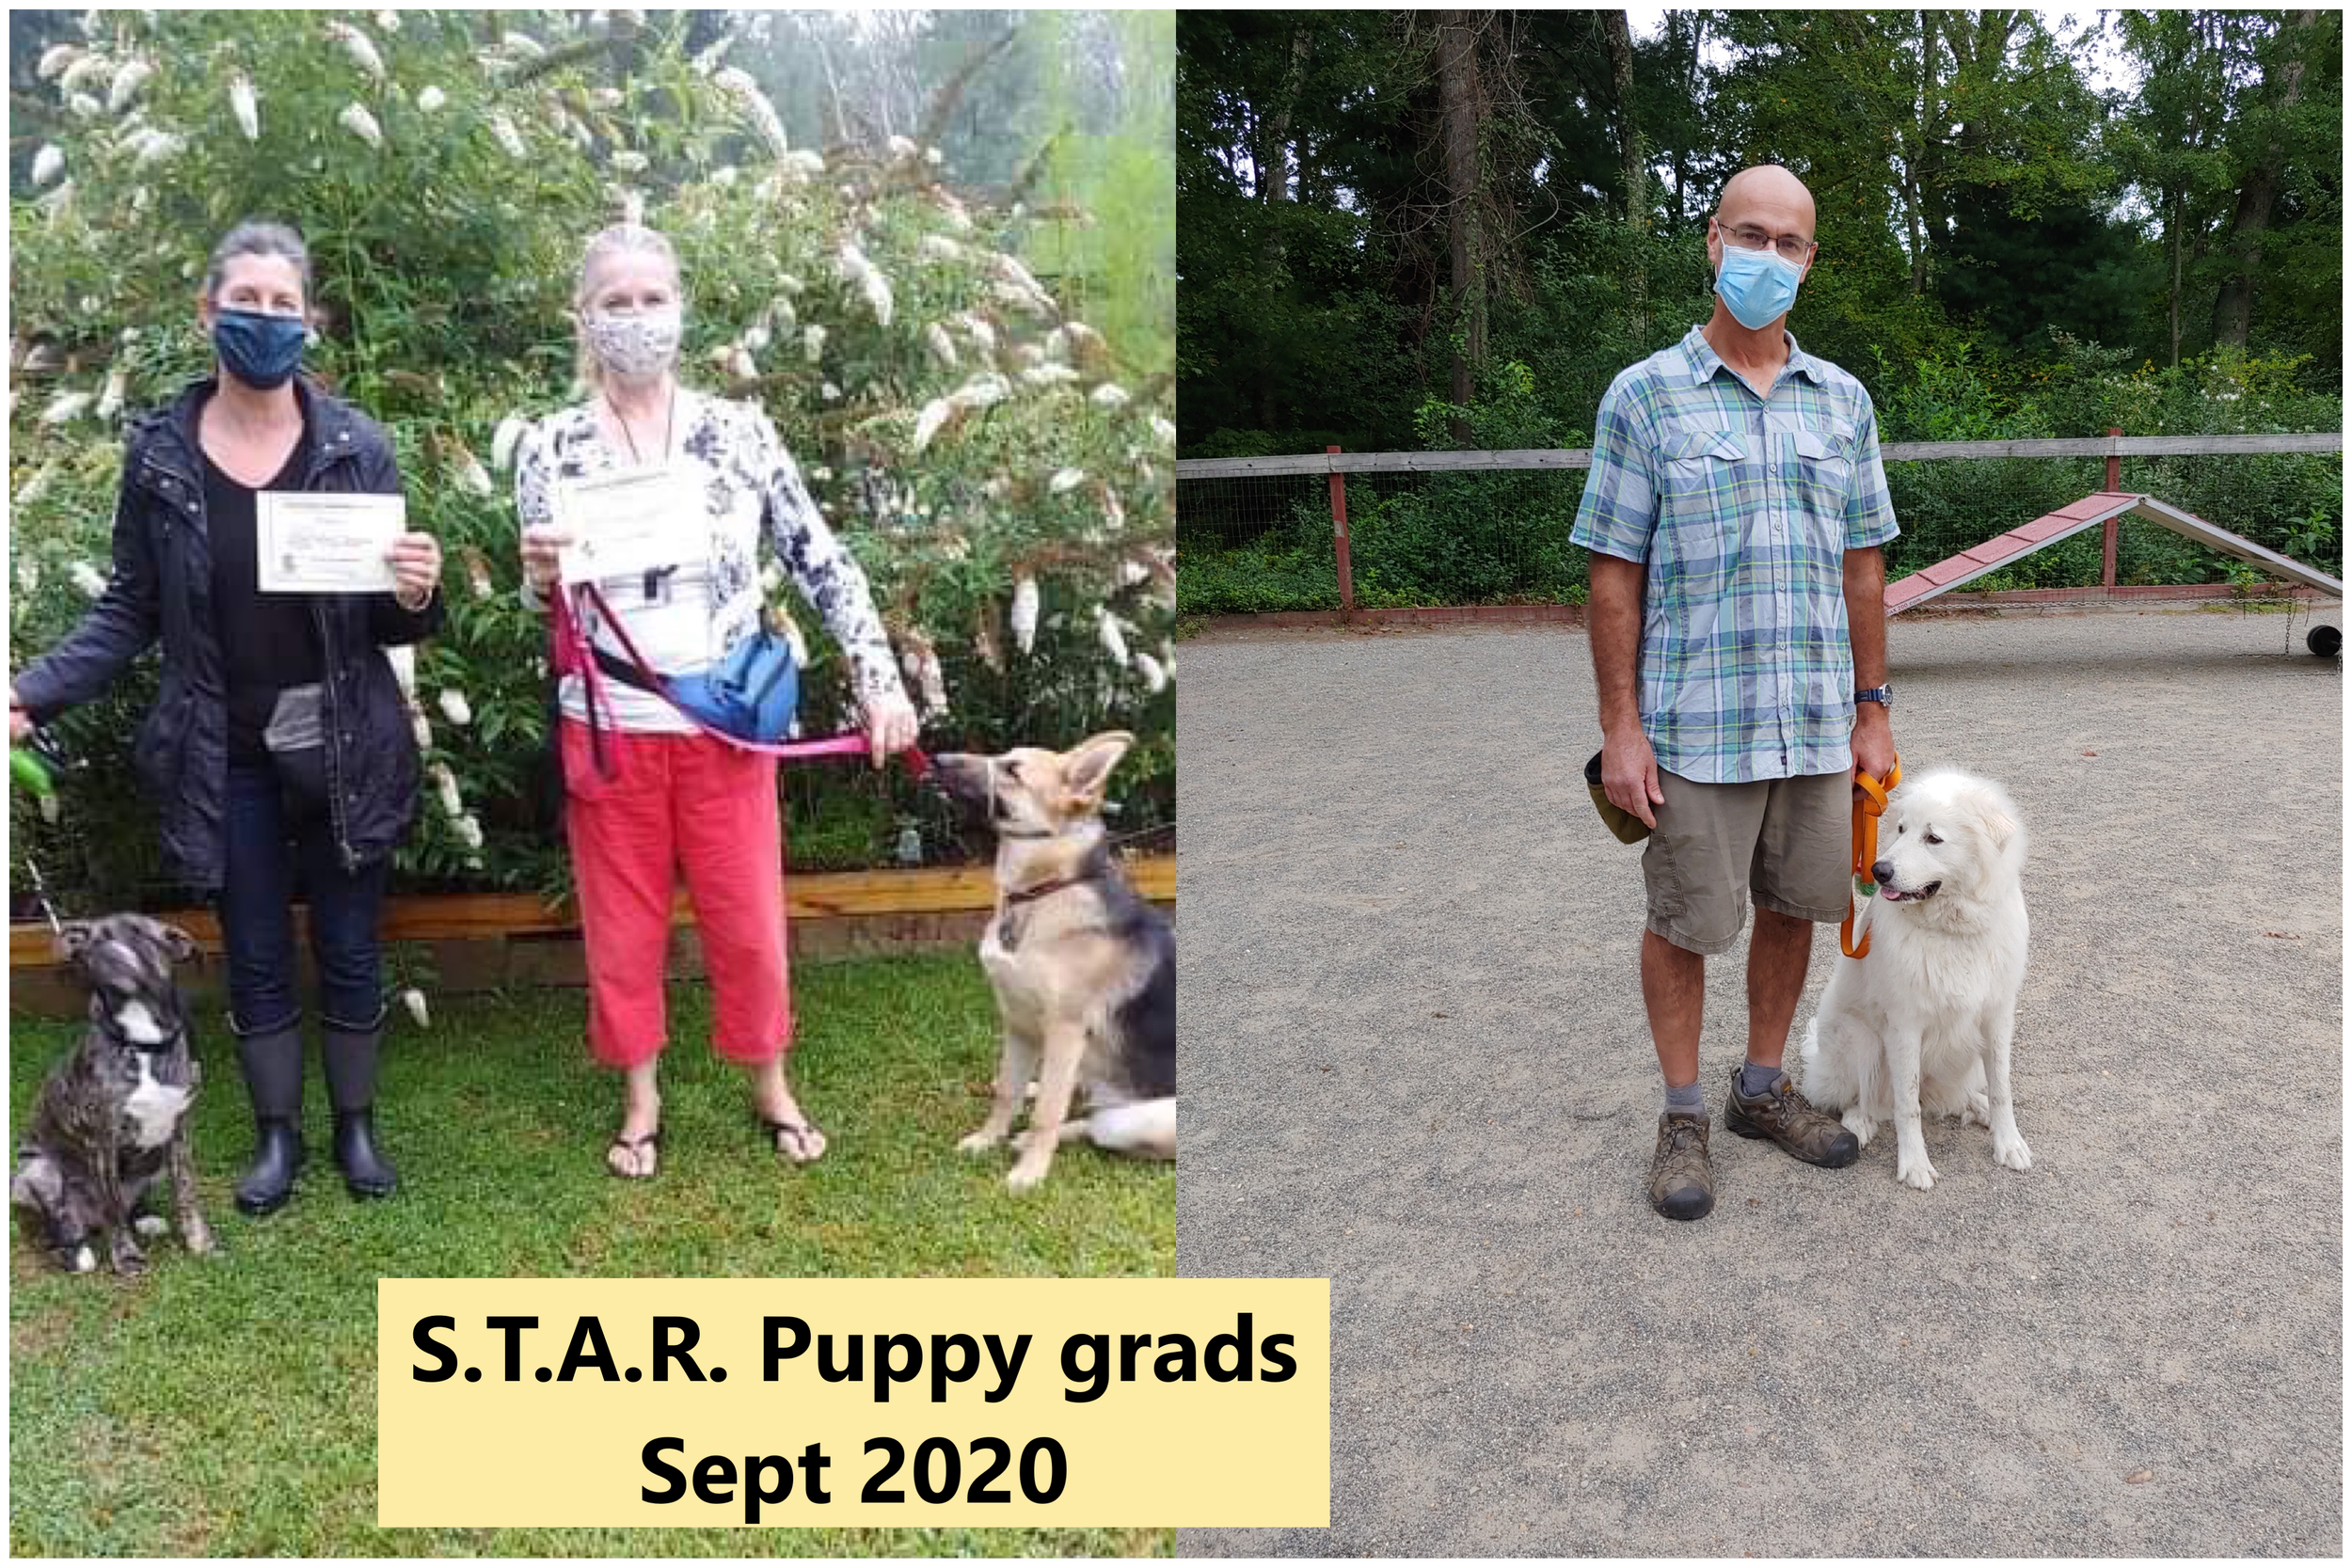 STAP puppy grads Sept 2020 label.png